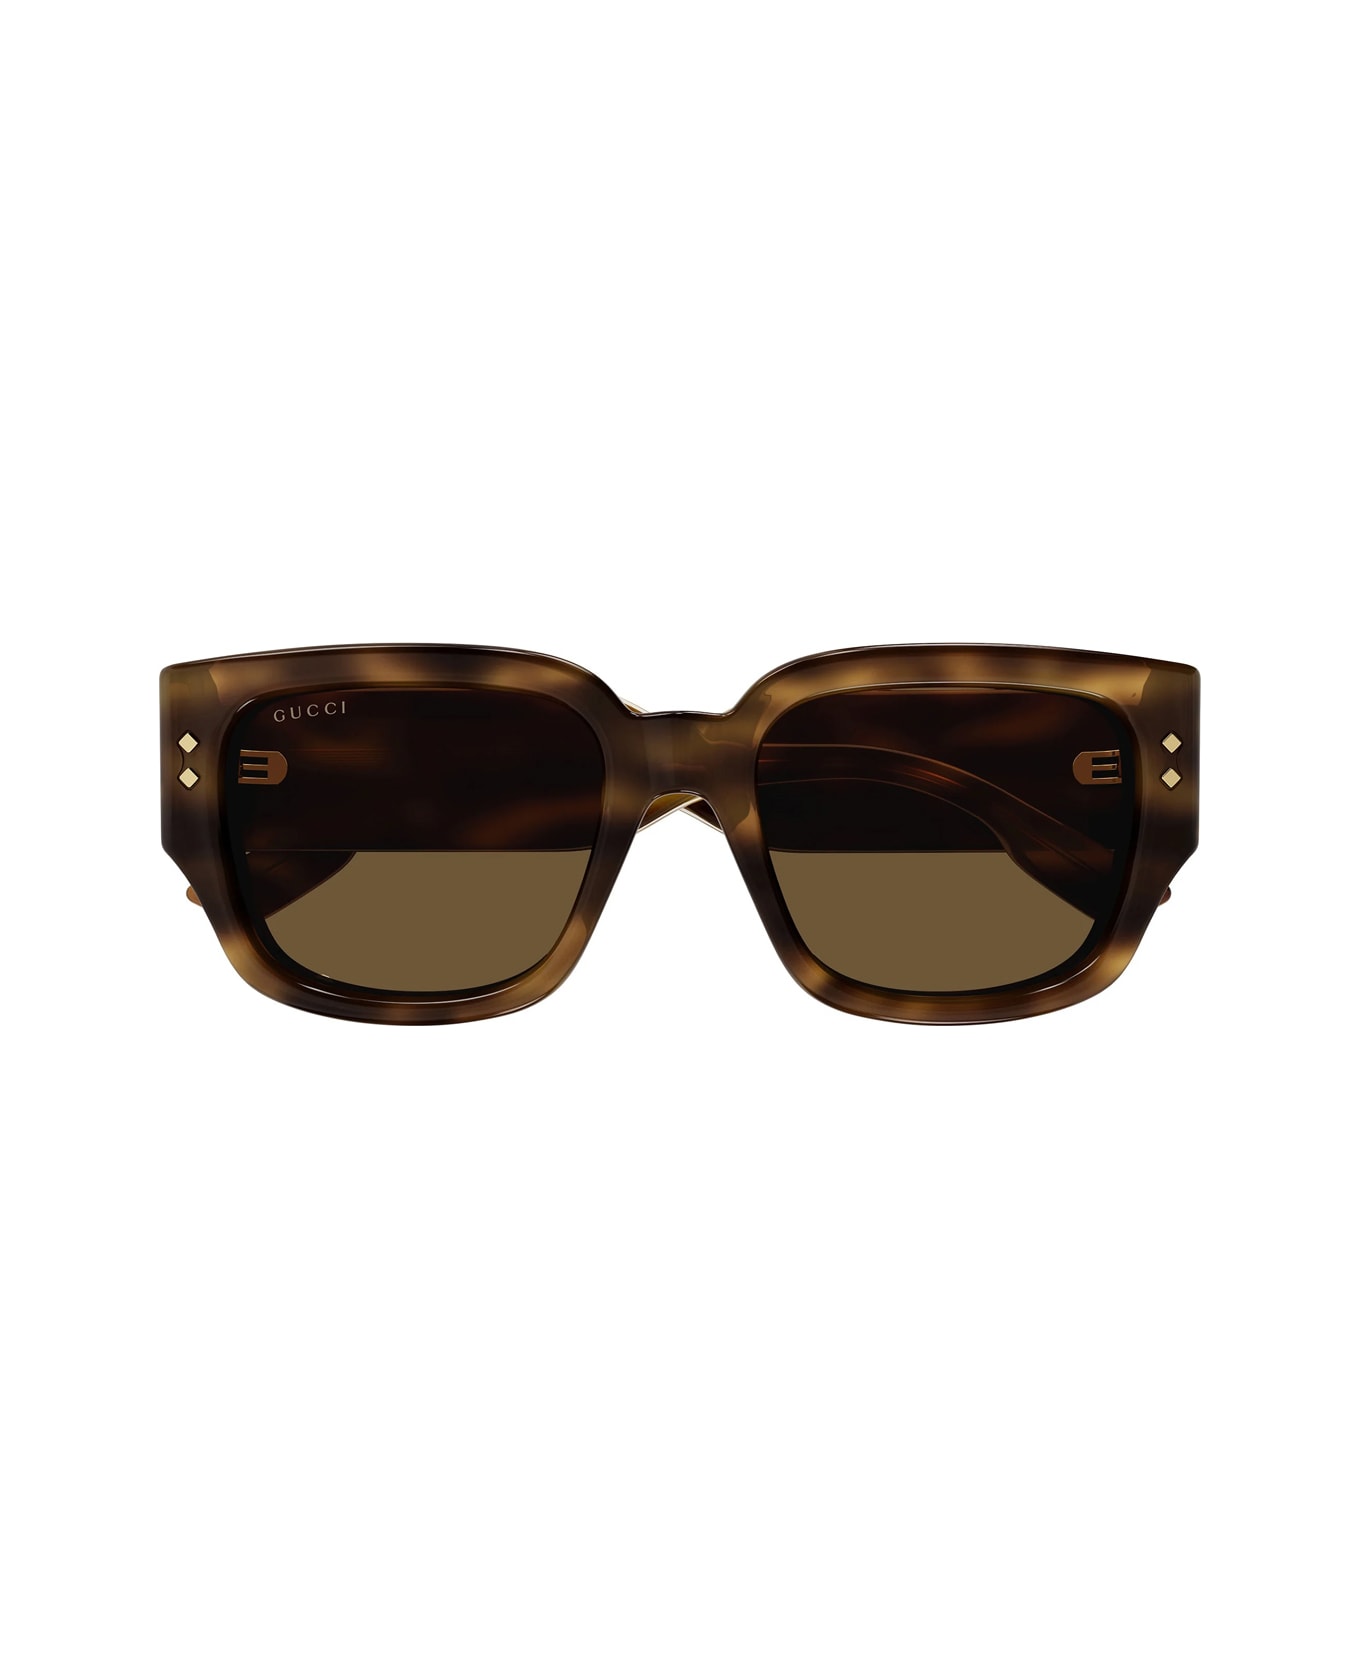 Gucci Eyewear Gg1261s Sunglasses Sunglasses - 002 HAVANA HAVANA BROWN